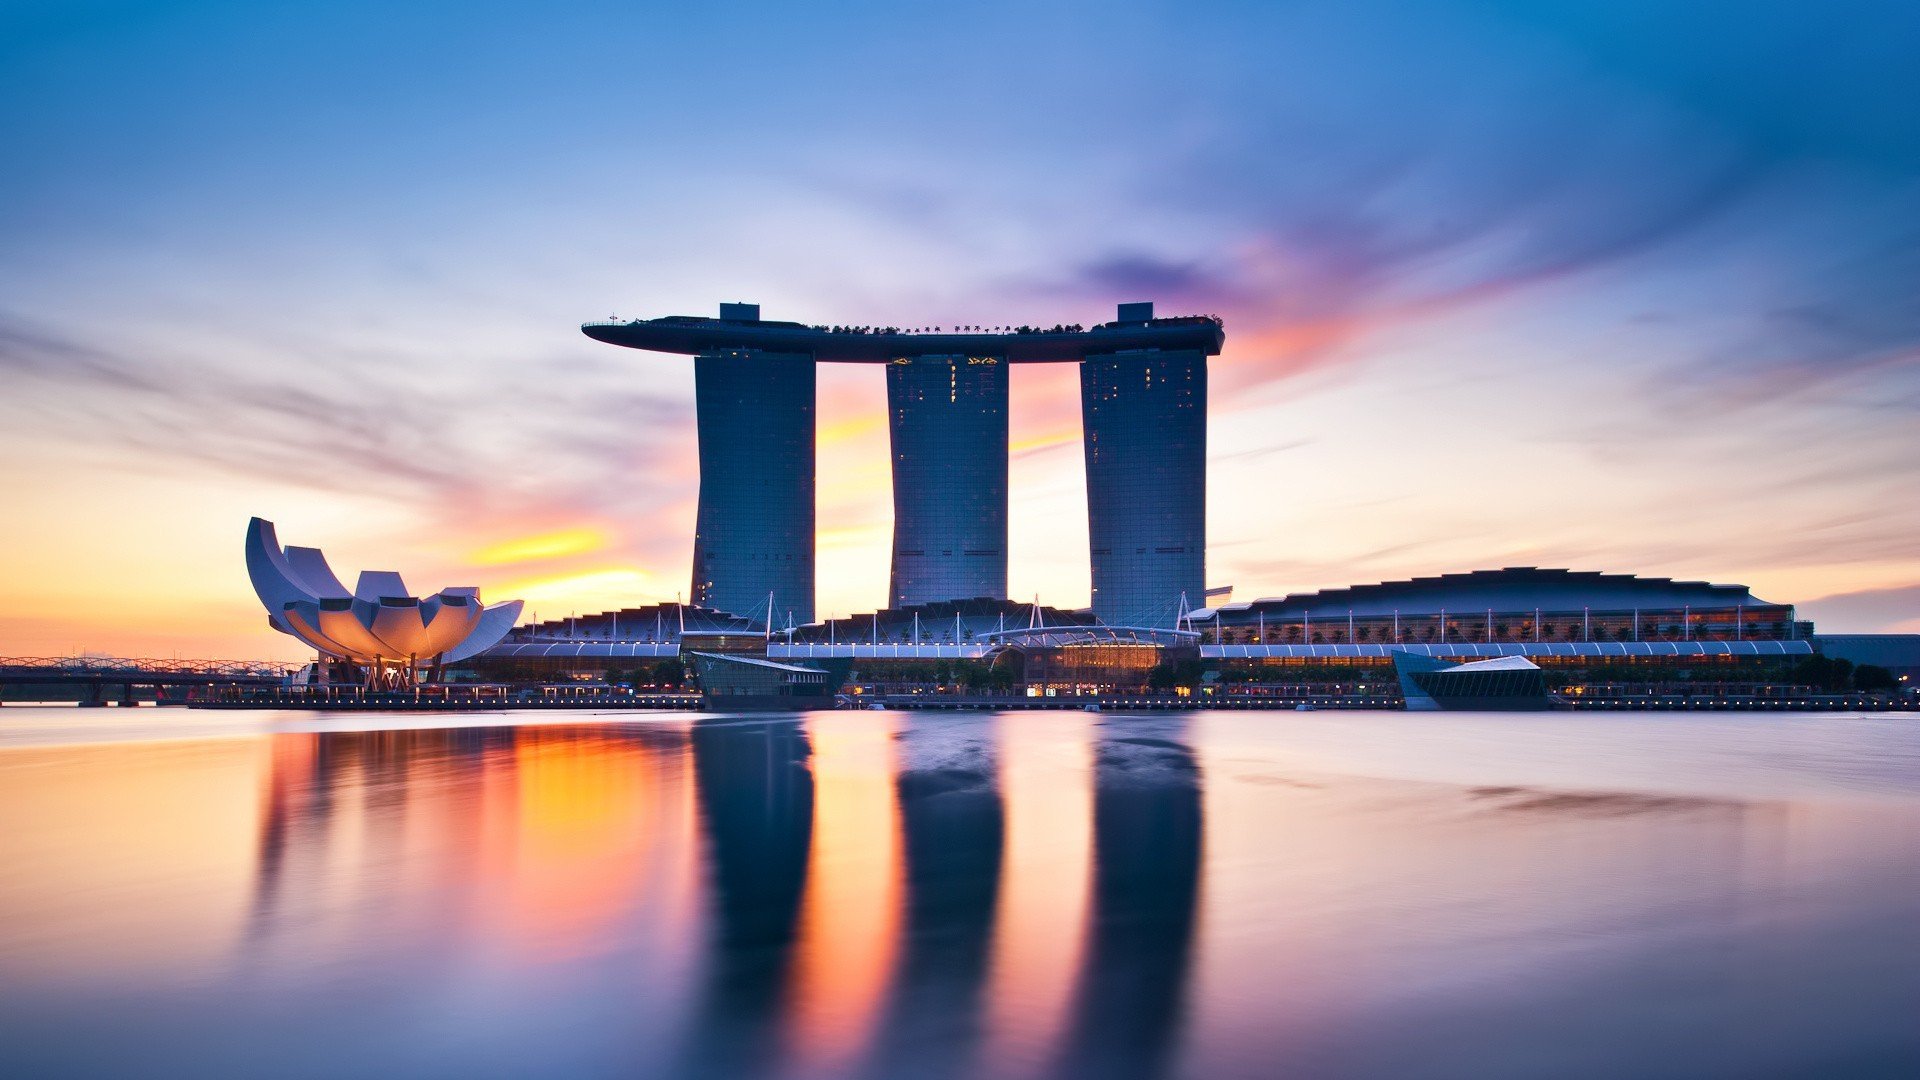 Marina Bay, Singapore, Hotels, Reflection, Architecture Wallpaper